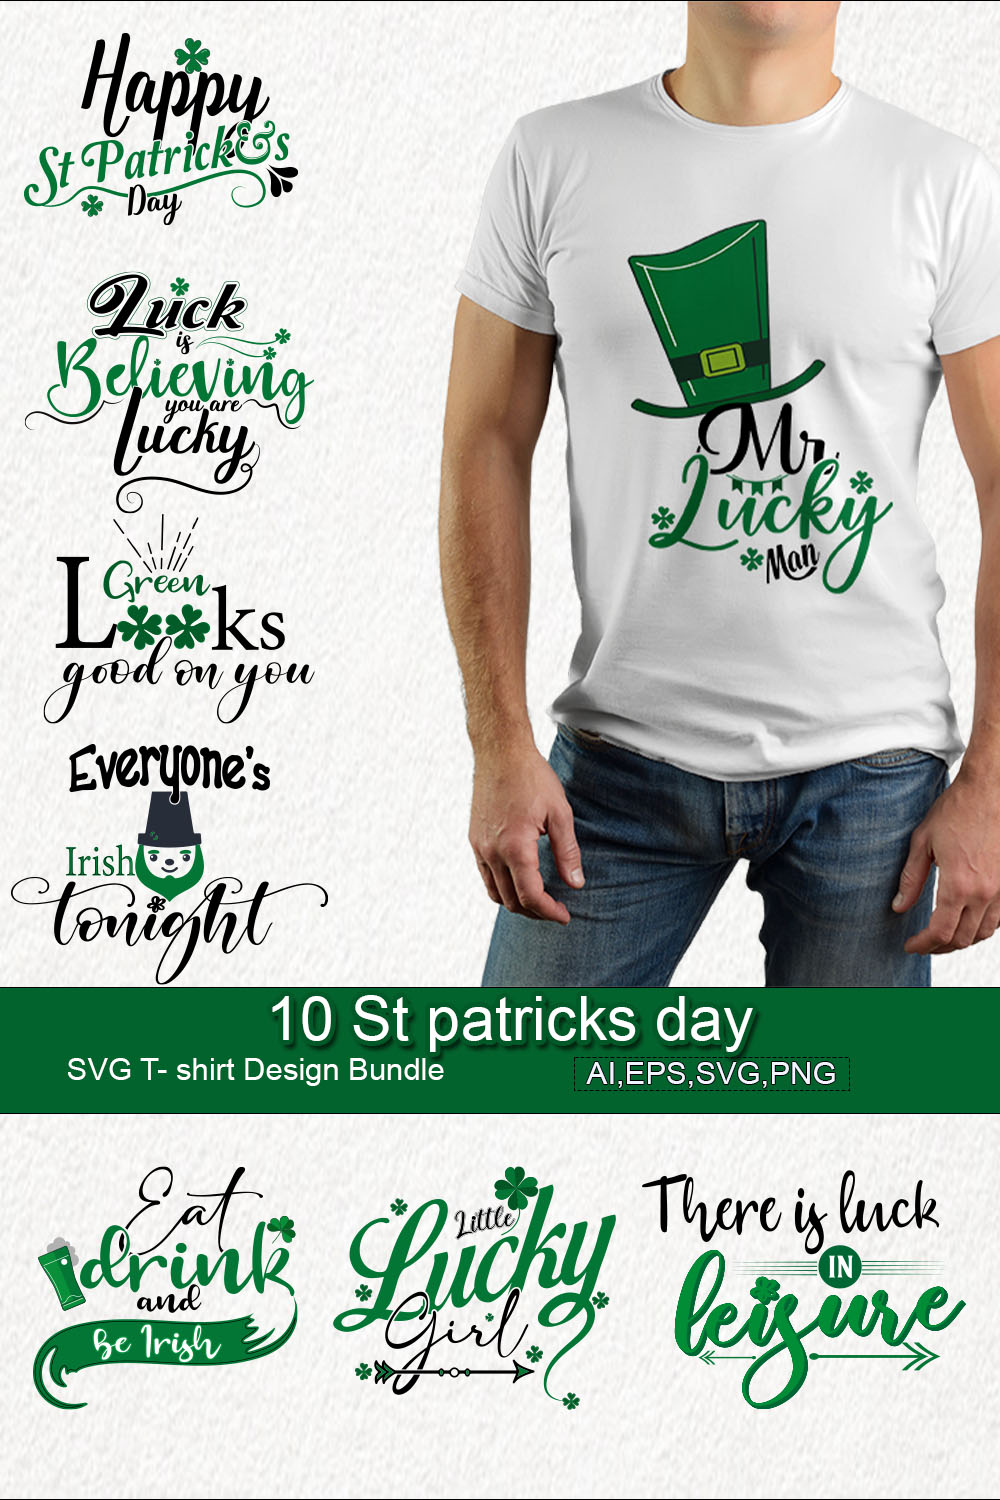 10 st patricks day SVG typography t shirt design bundle pinterest preview image.